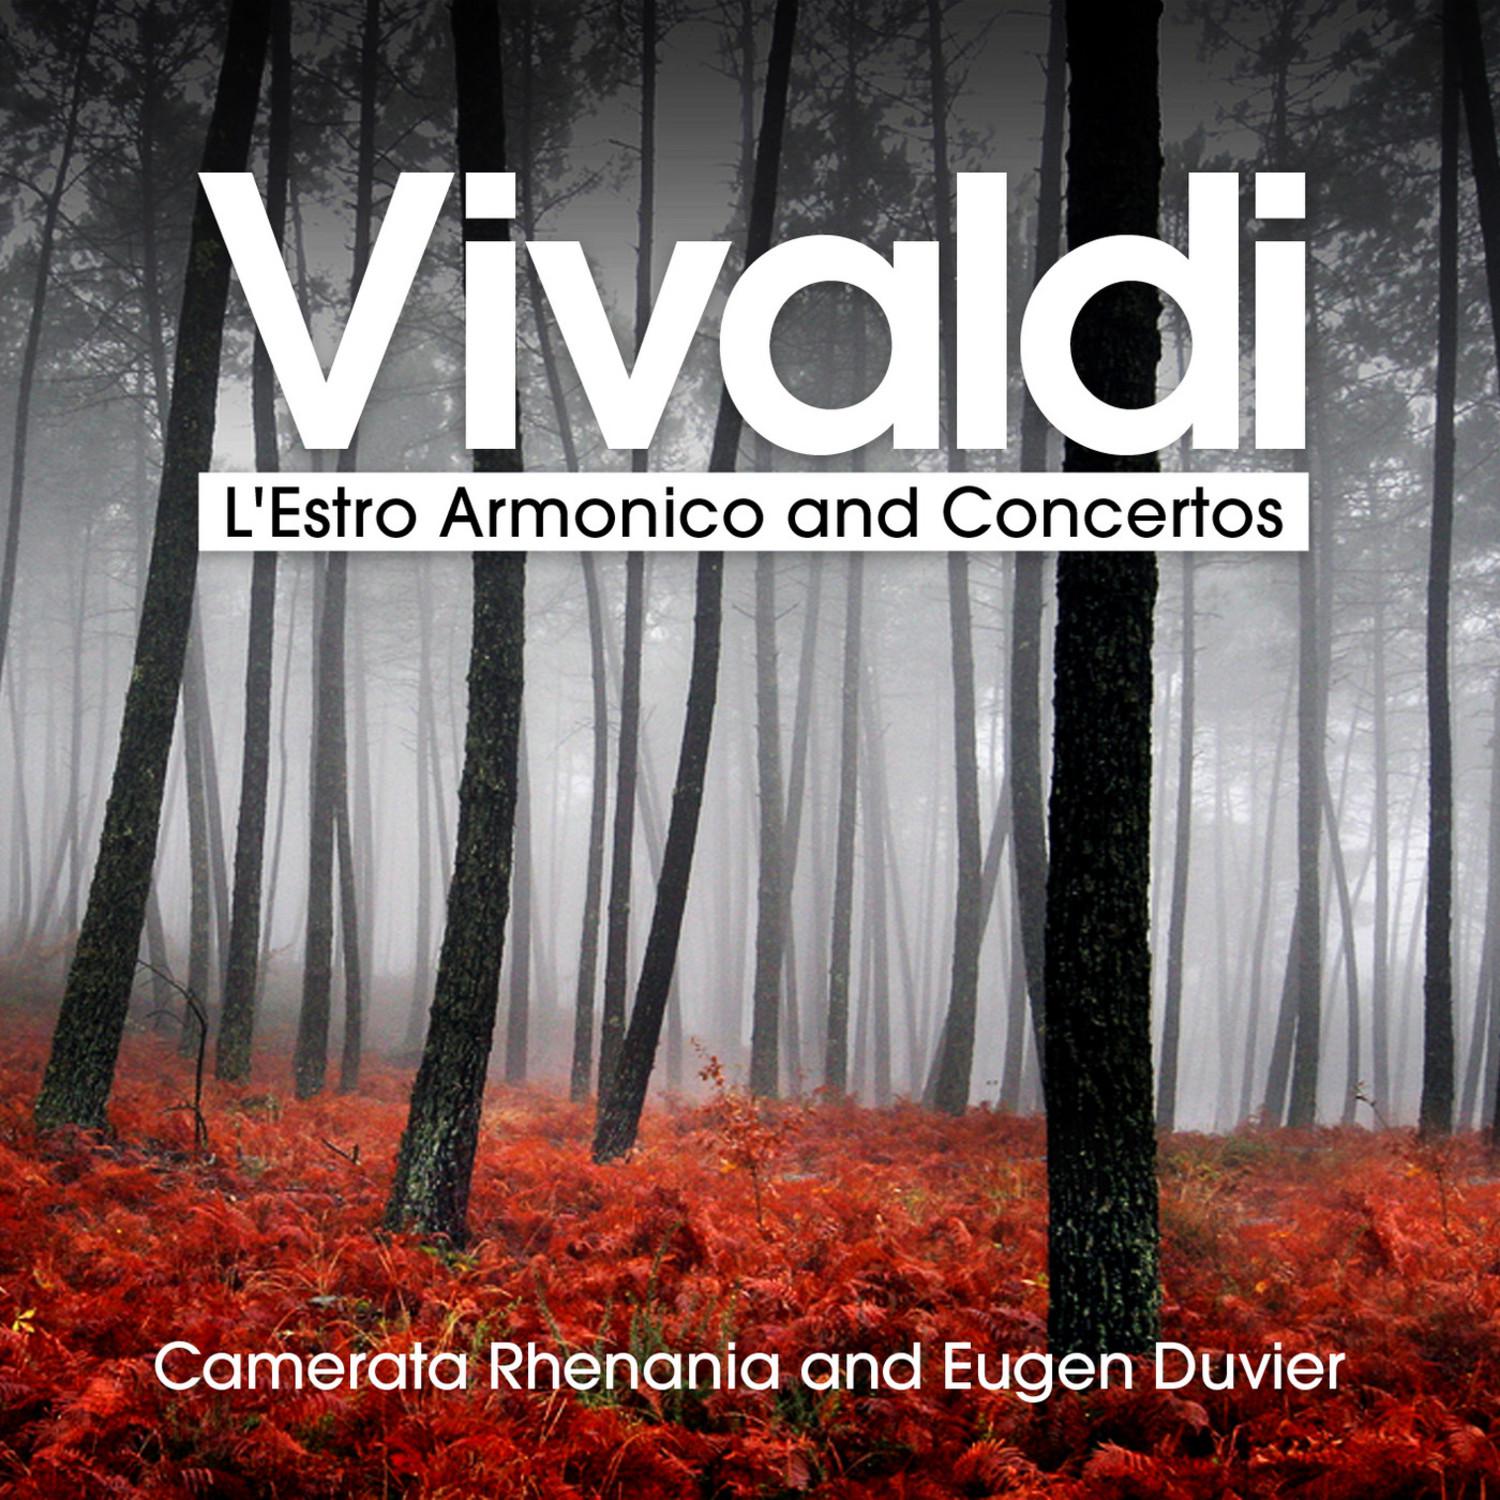 L'Estro Armonico, Op. 3 - Concerto No. 7 in F Major for 4 Violins, Cello and Strings, RV 567: III. Allegro